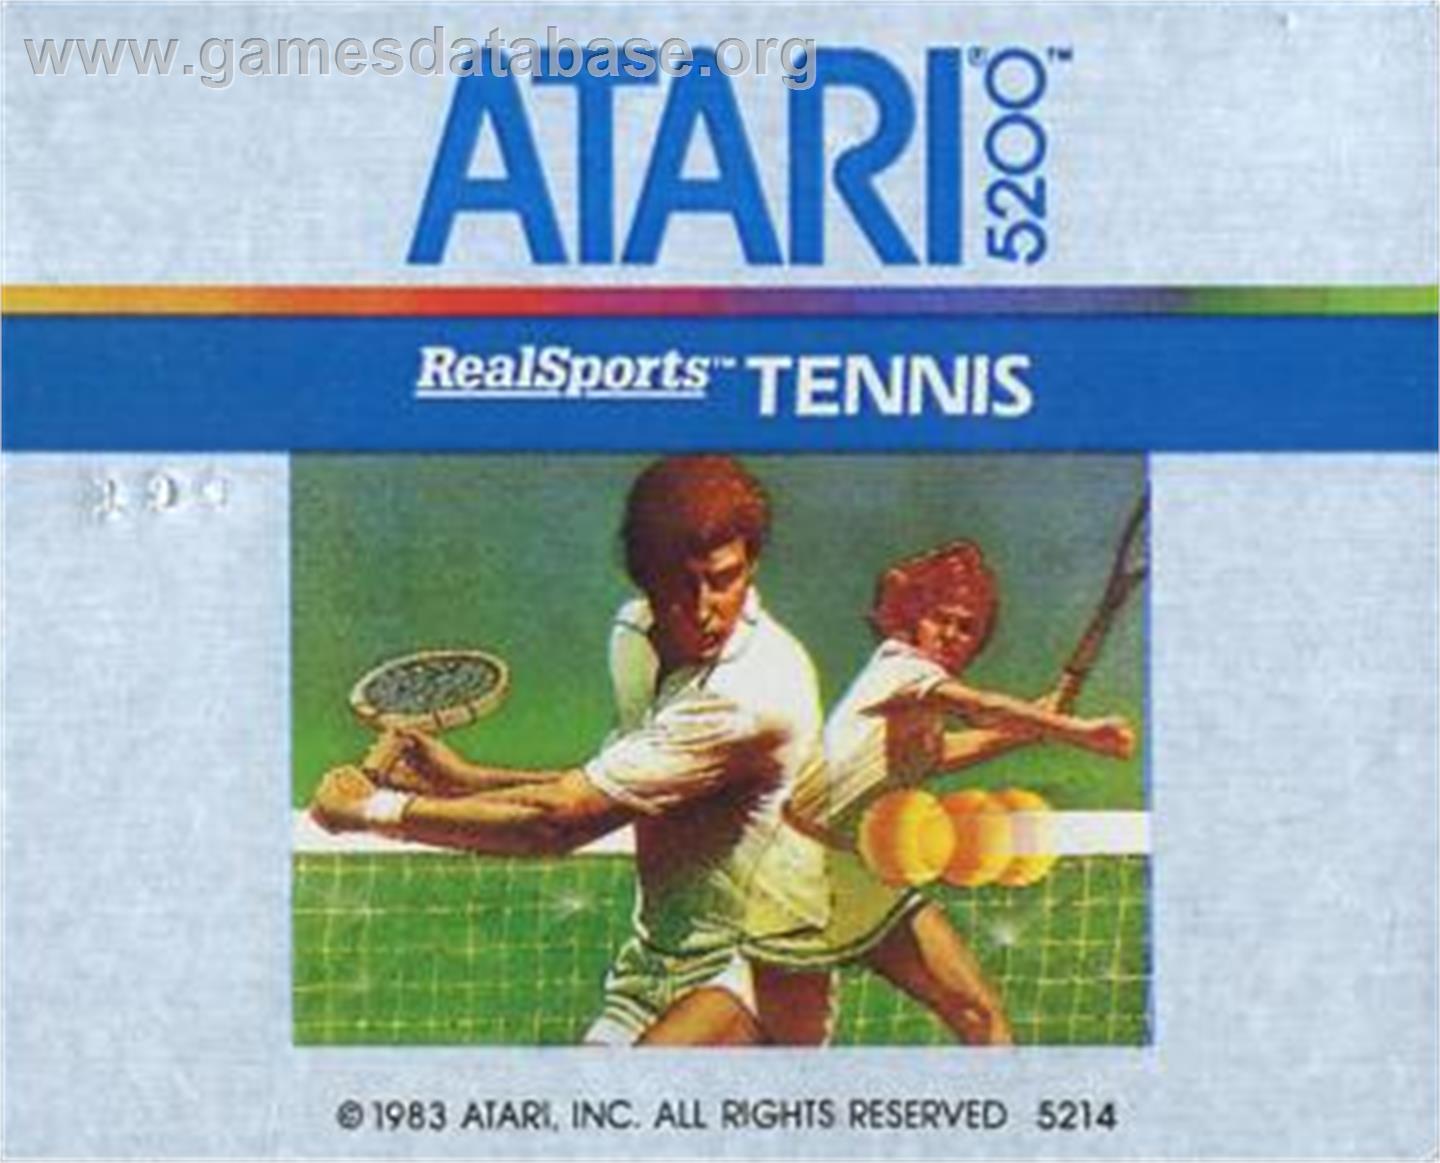 RealSports Tennis - Atari 5200 - Artwork - Cartridge Top